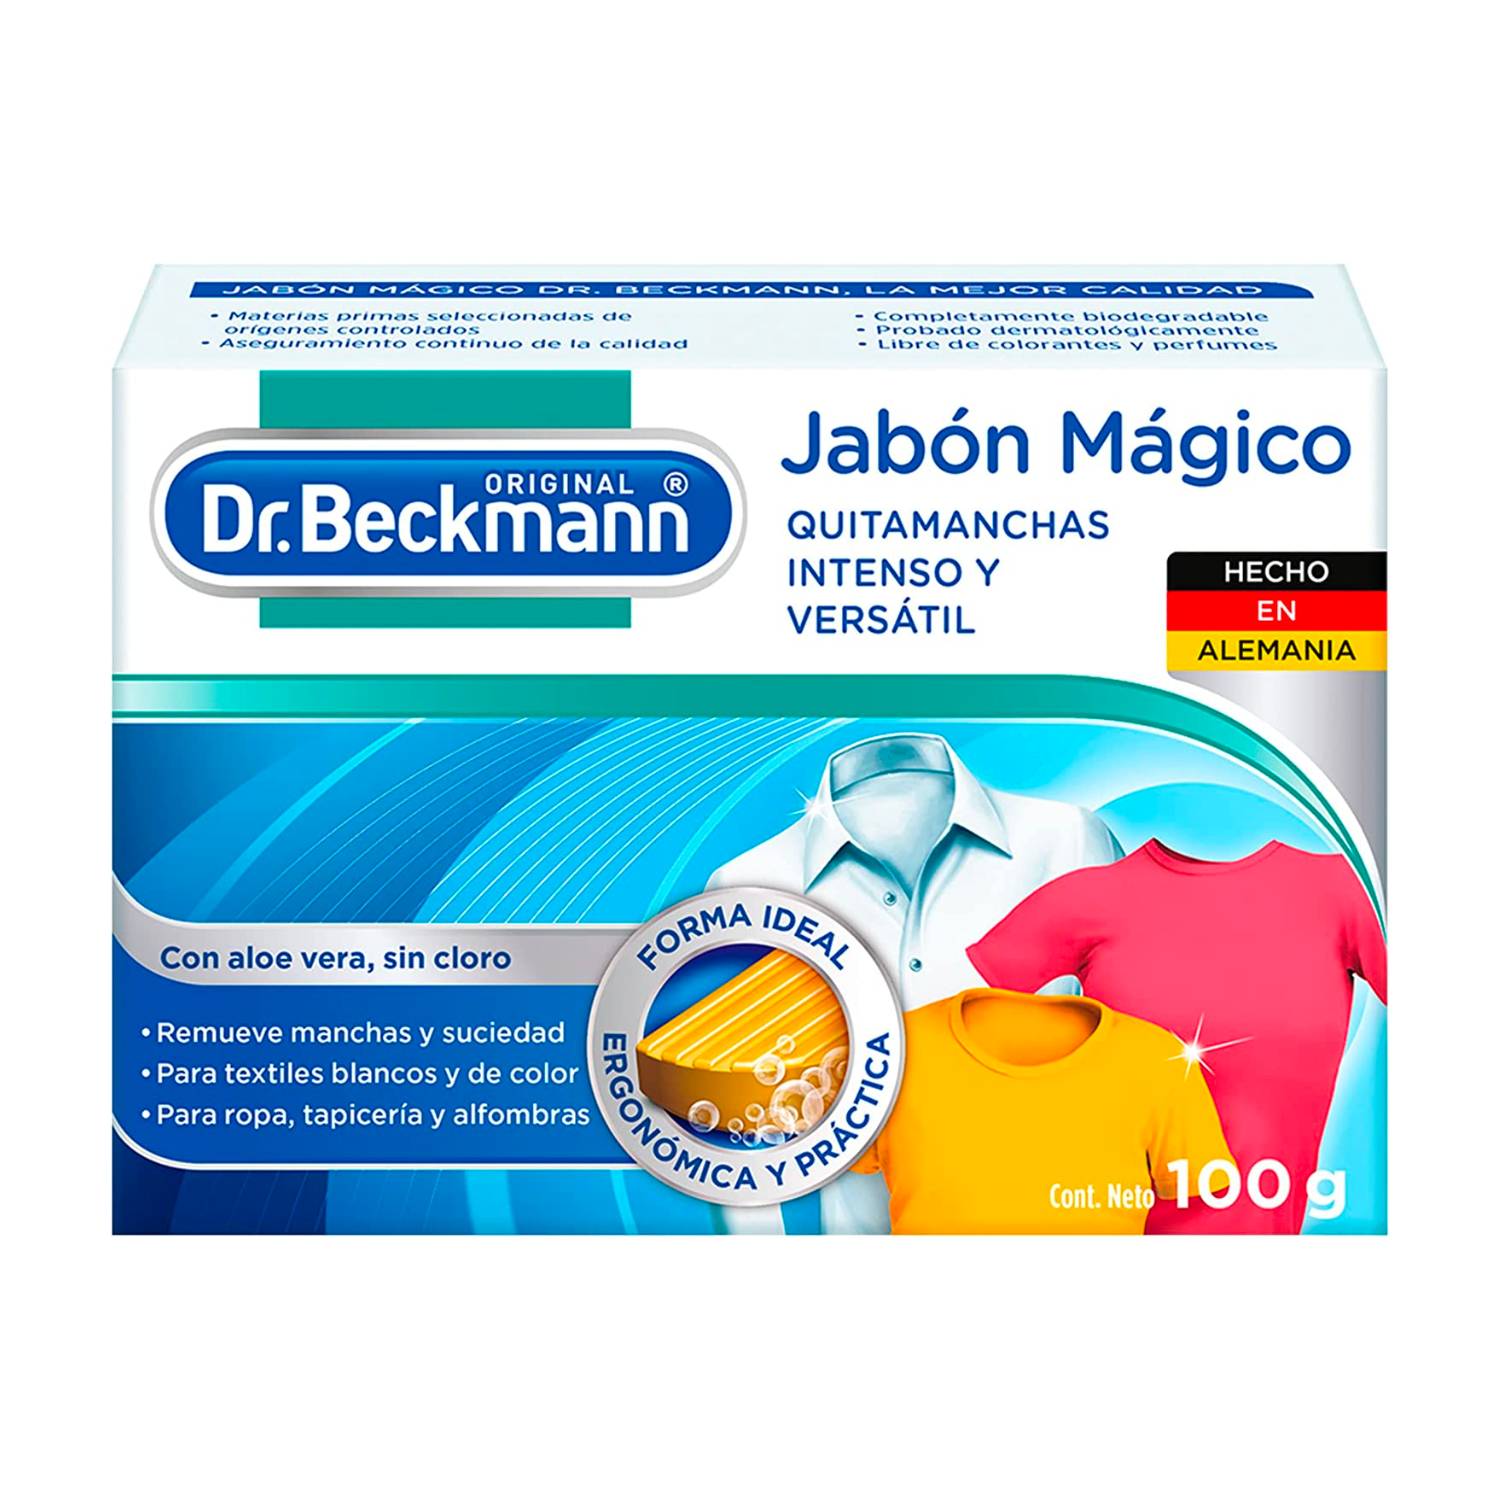 DR BECKMANN Dr. Beckmann Jabon Magico Quitamanchas Intenso 100 g